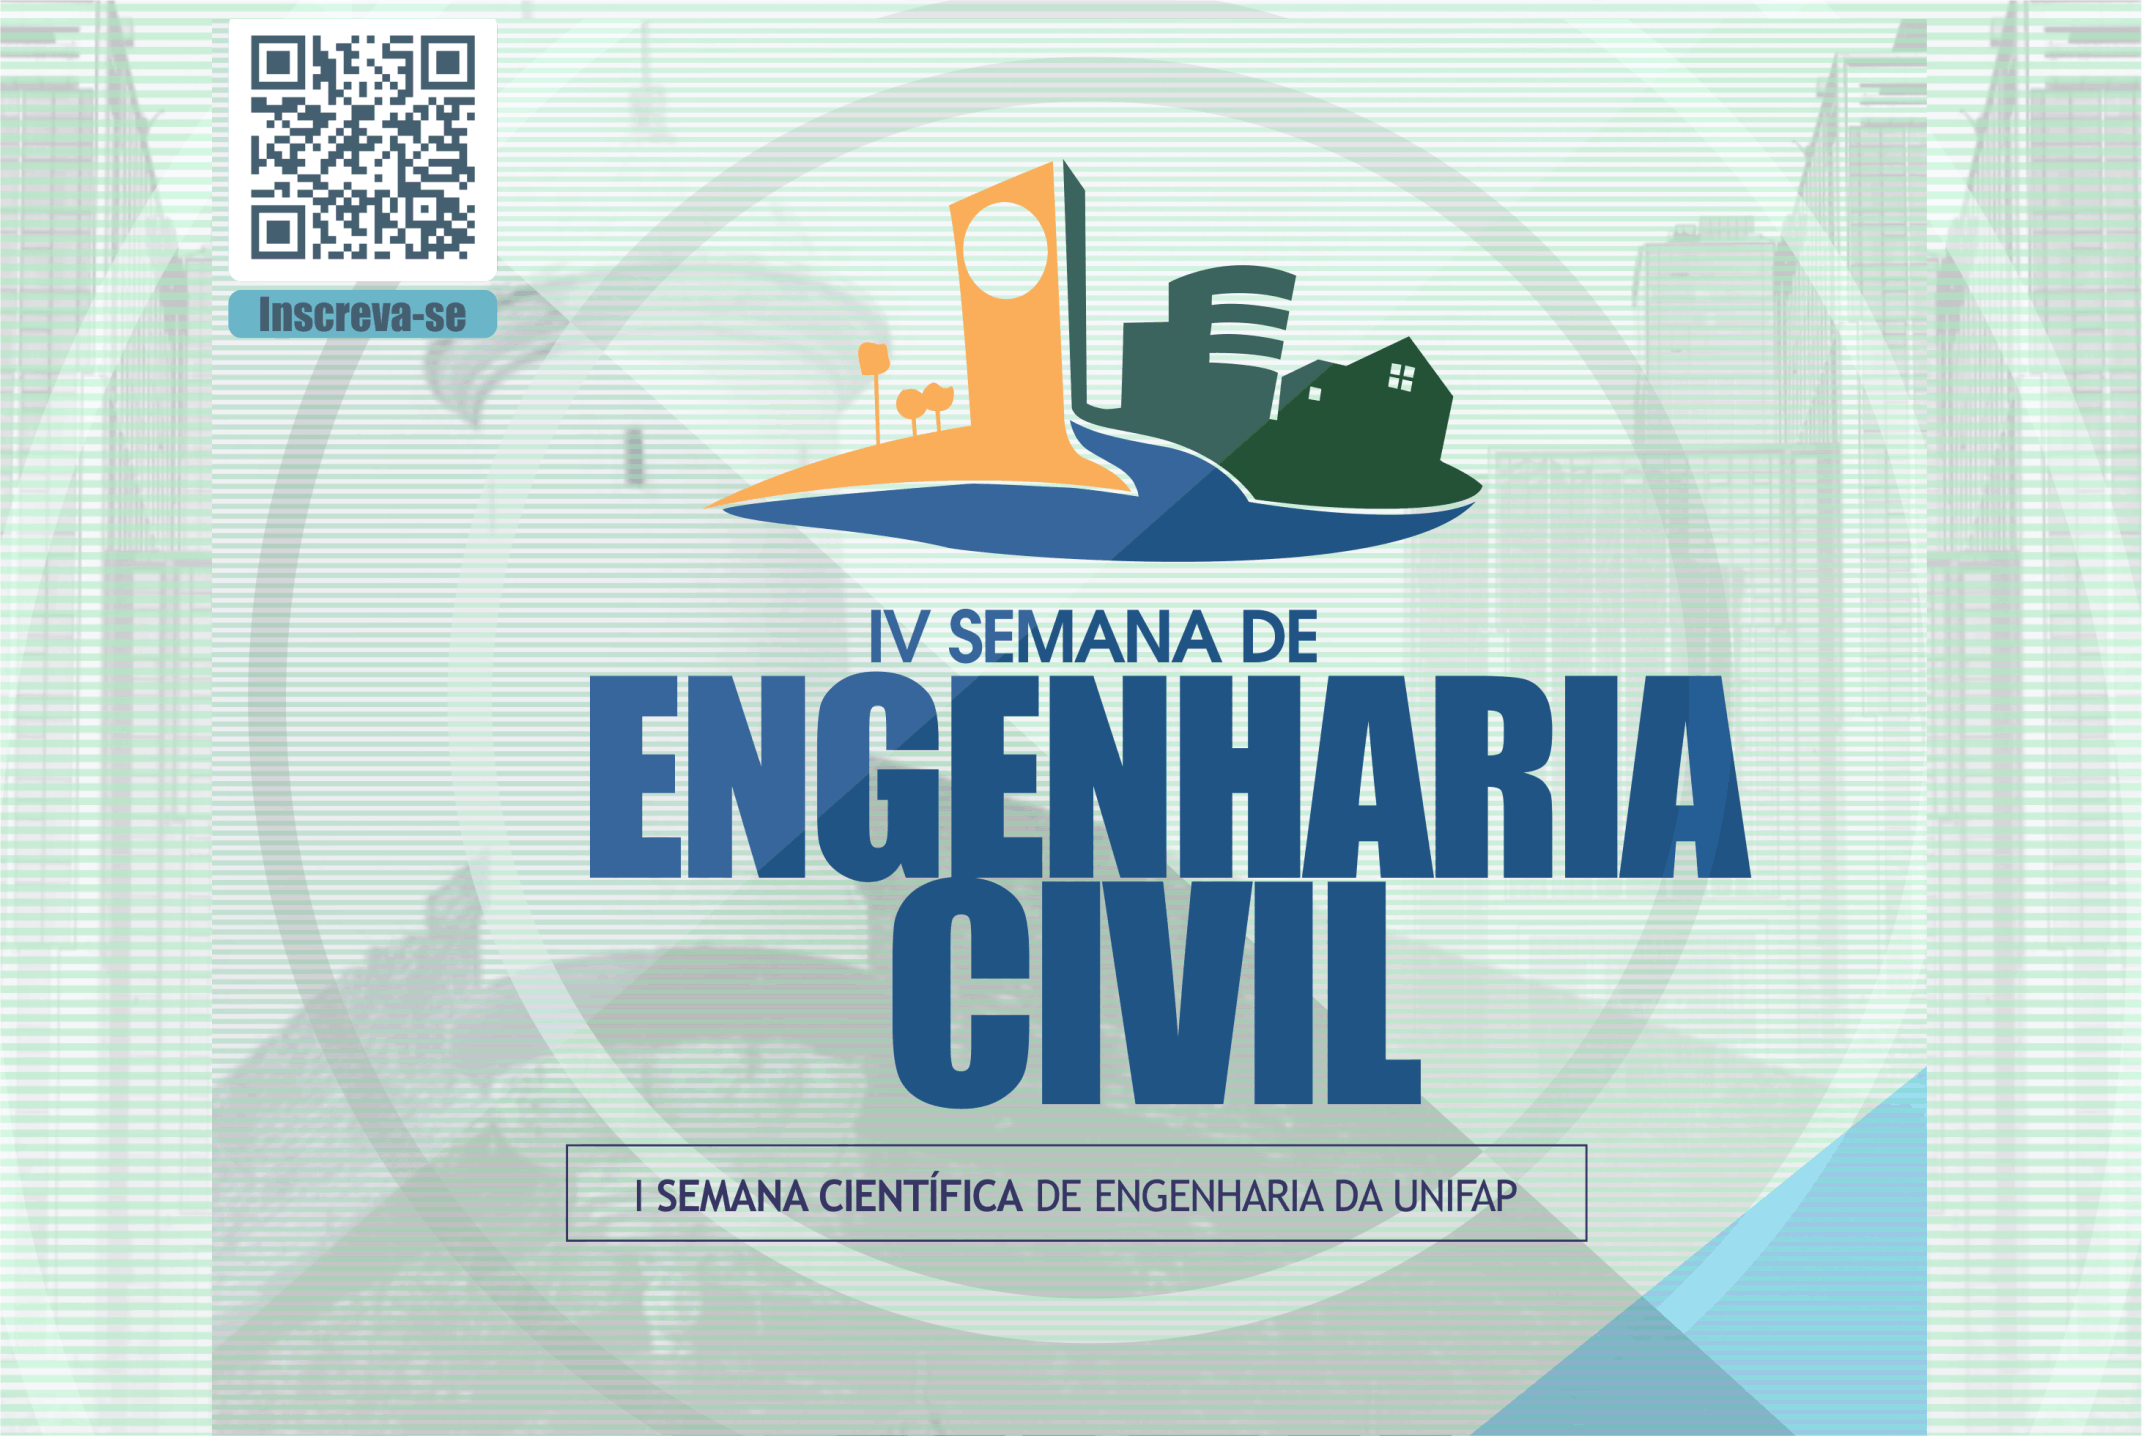 4ª Semana de Engenharia Civil abordará infraestrutura e saneamento básico